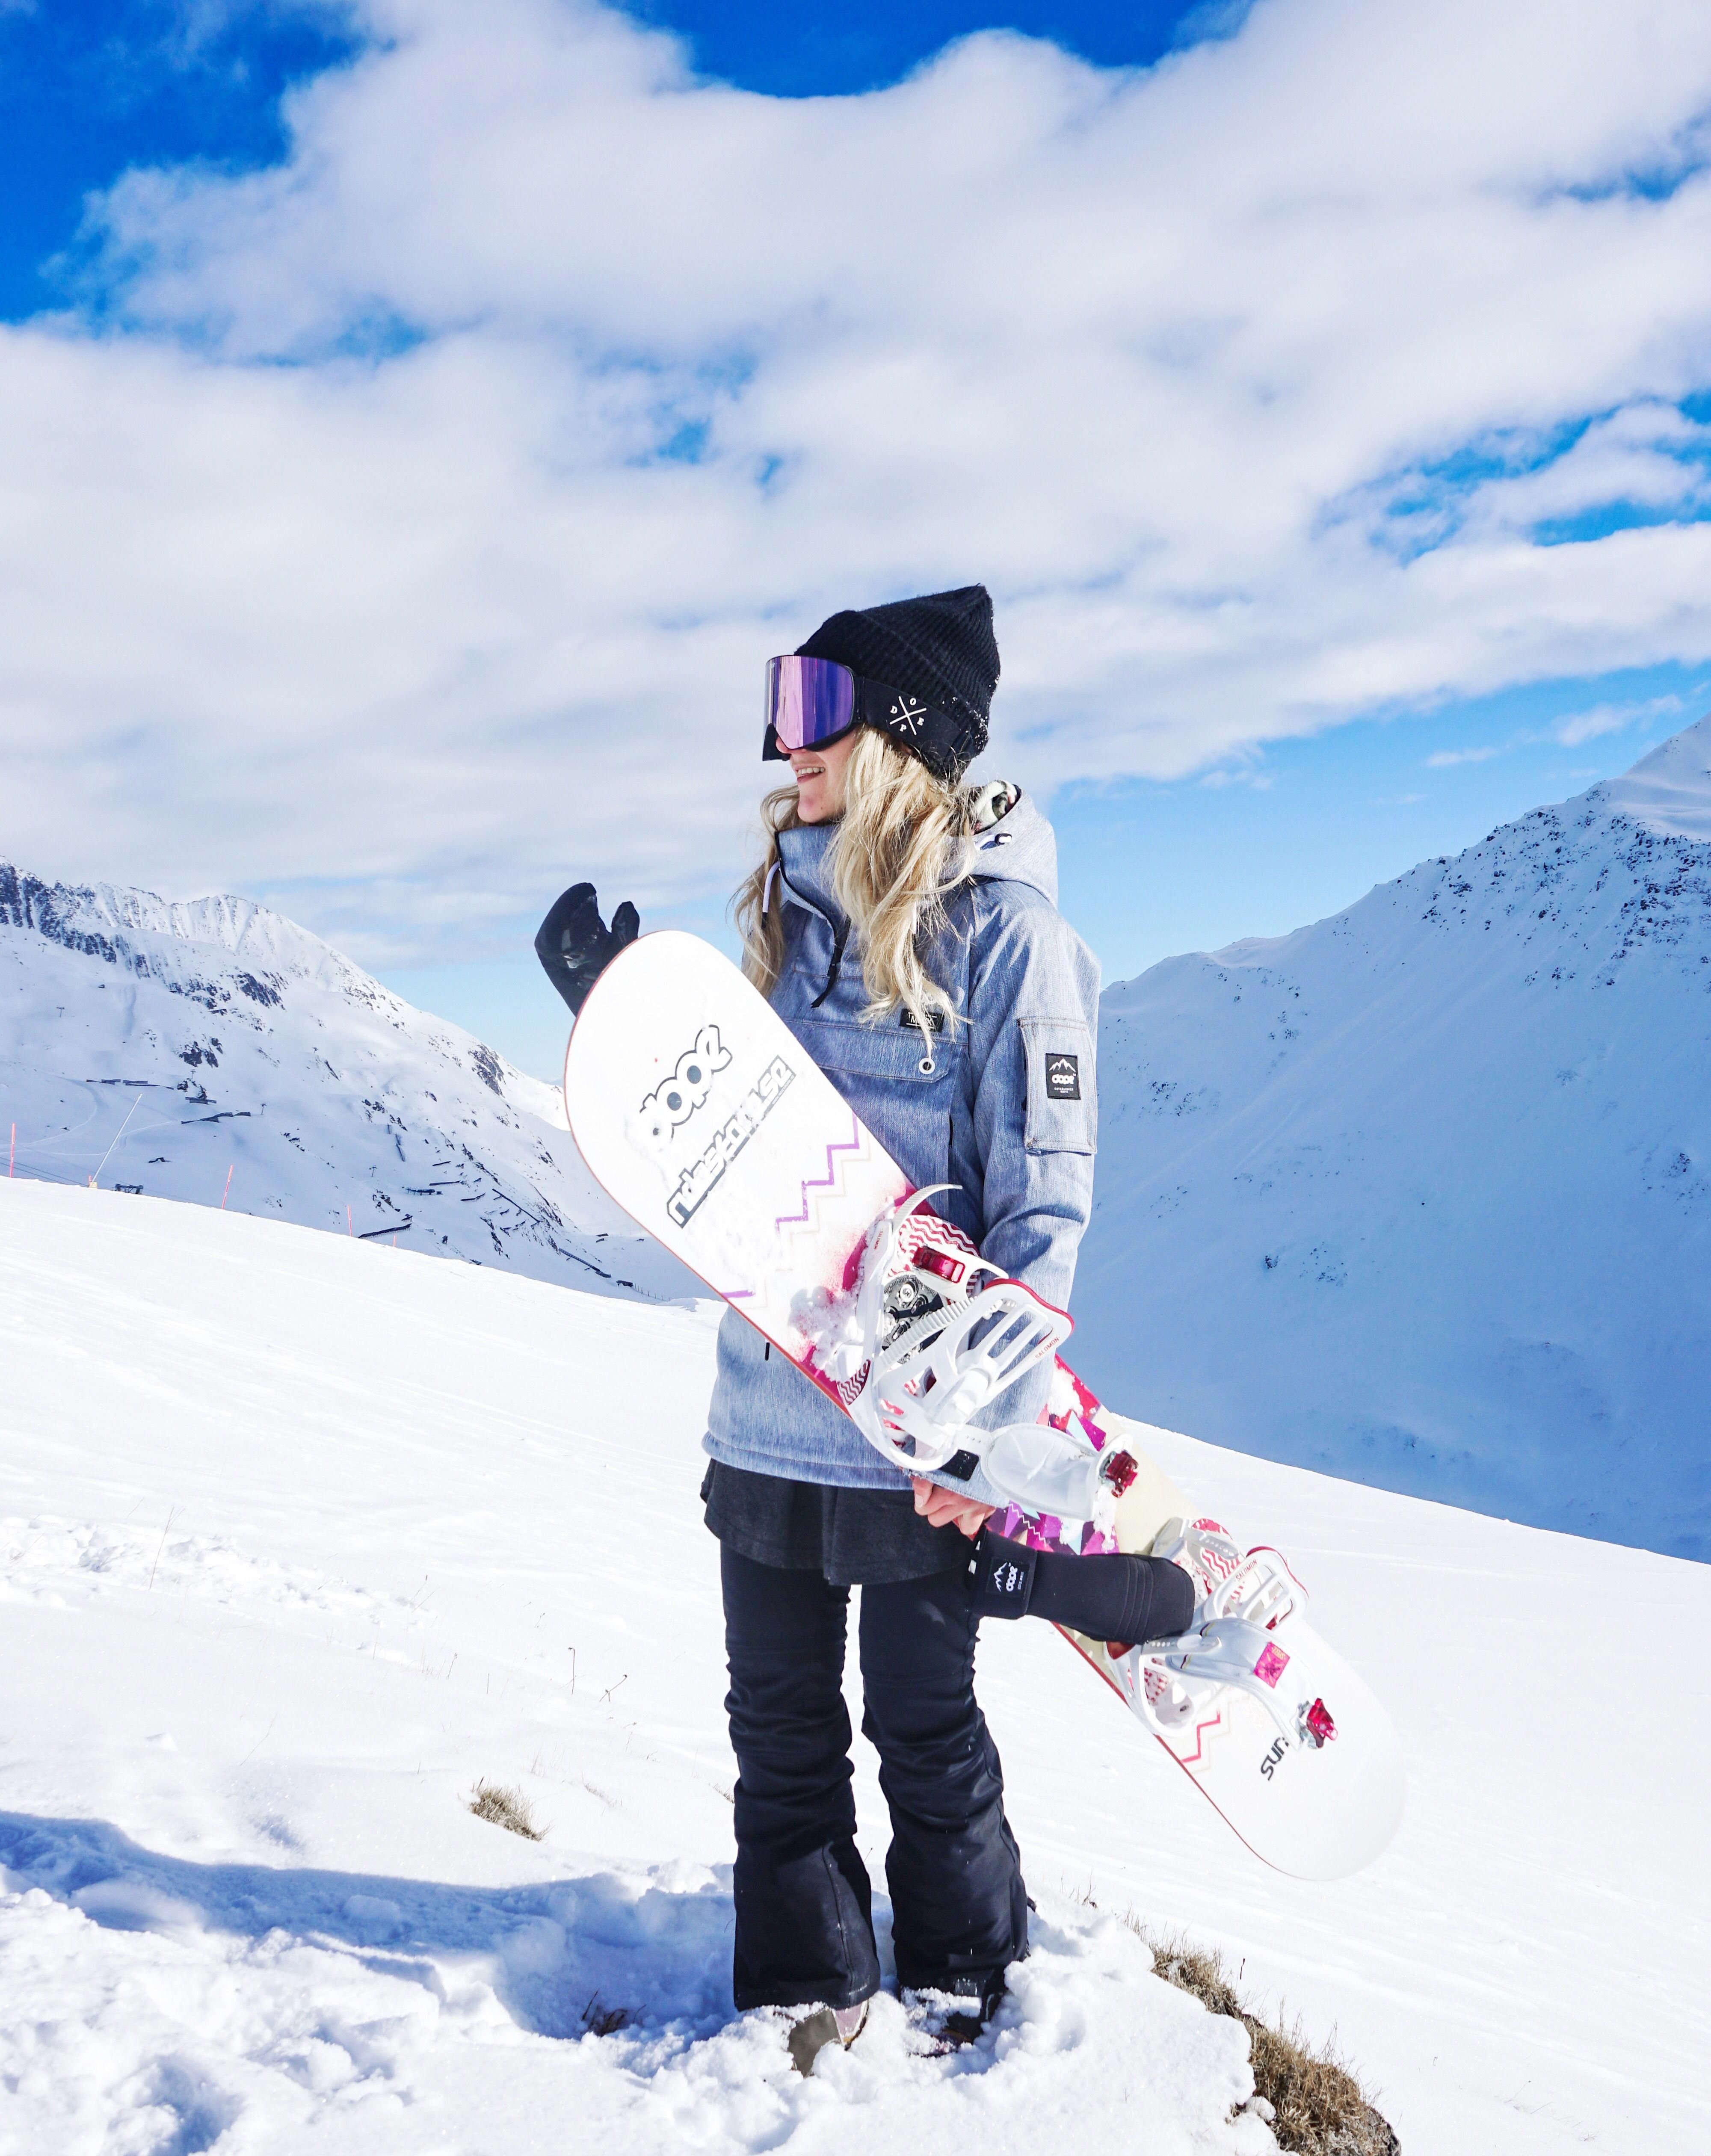 Ski trip. Девушка на сноуборде. Фотосессия со сноубордом. Стильная сноубордистка. Девушка сноубордист.